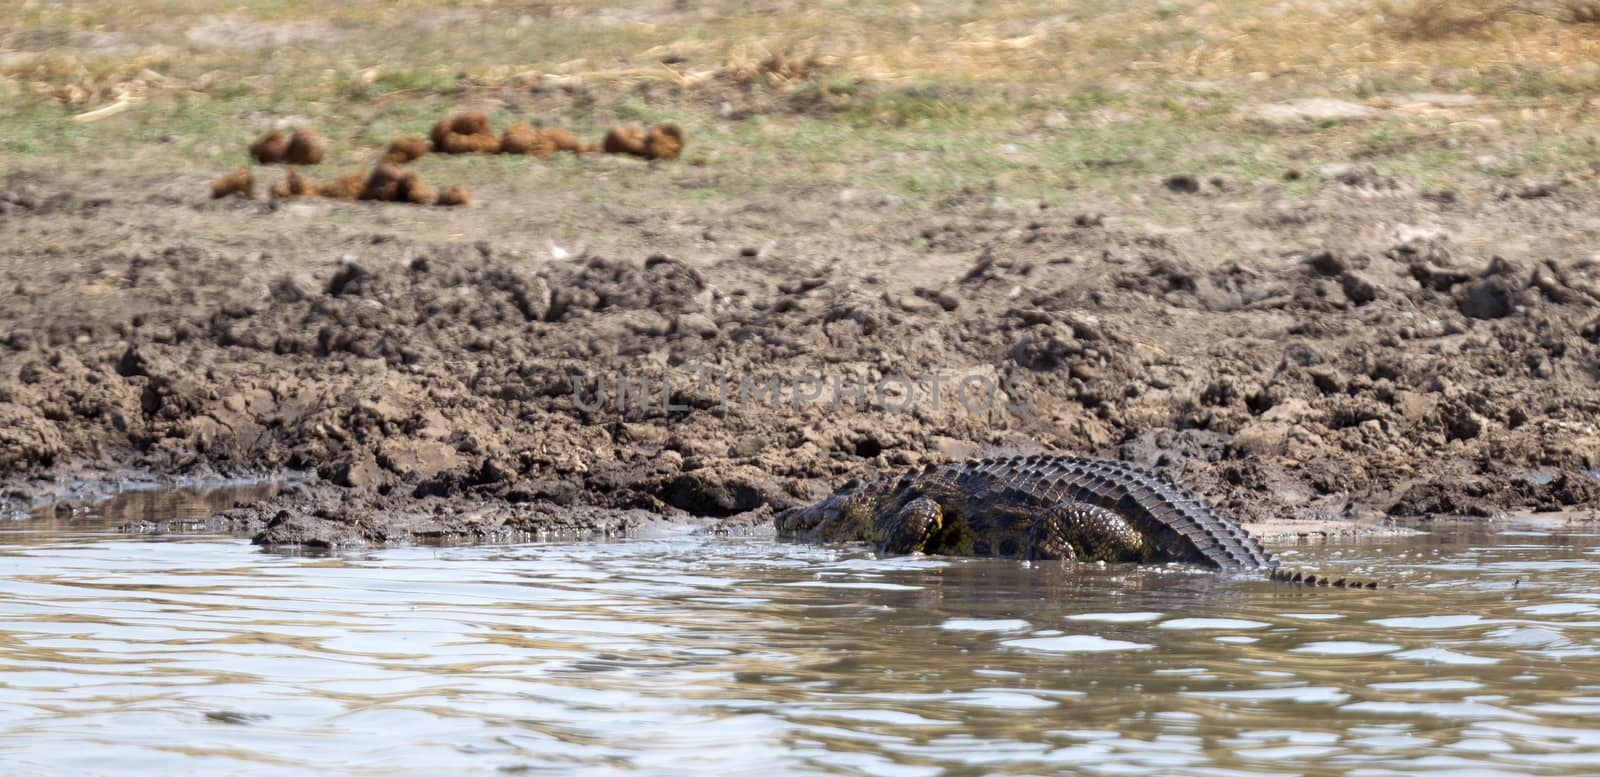 Crocodile in Botswana by michaklootwijk